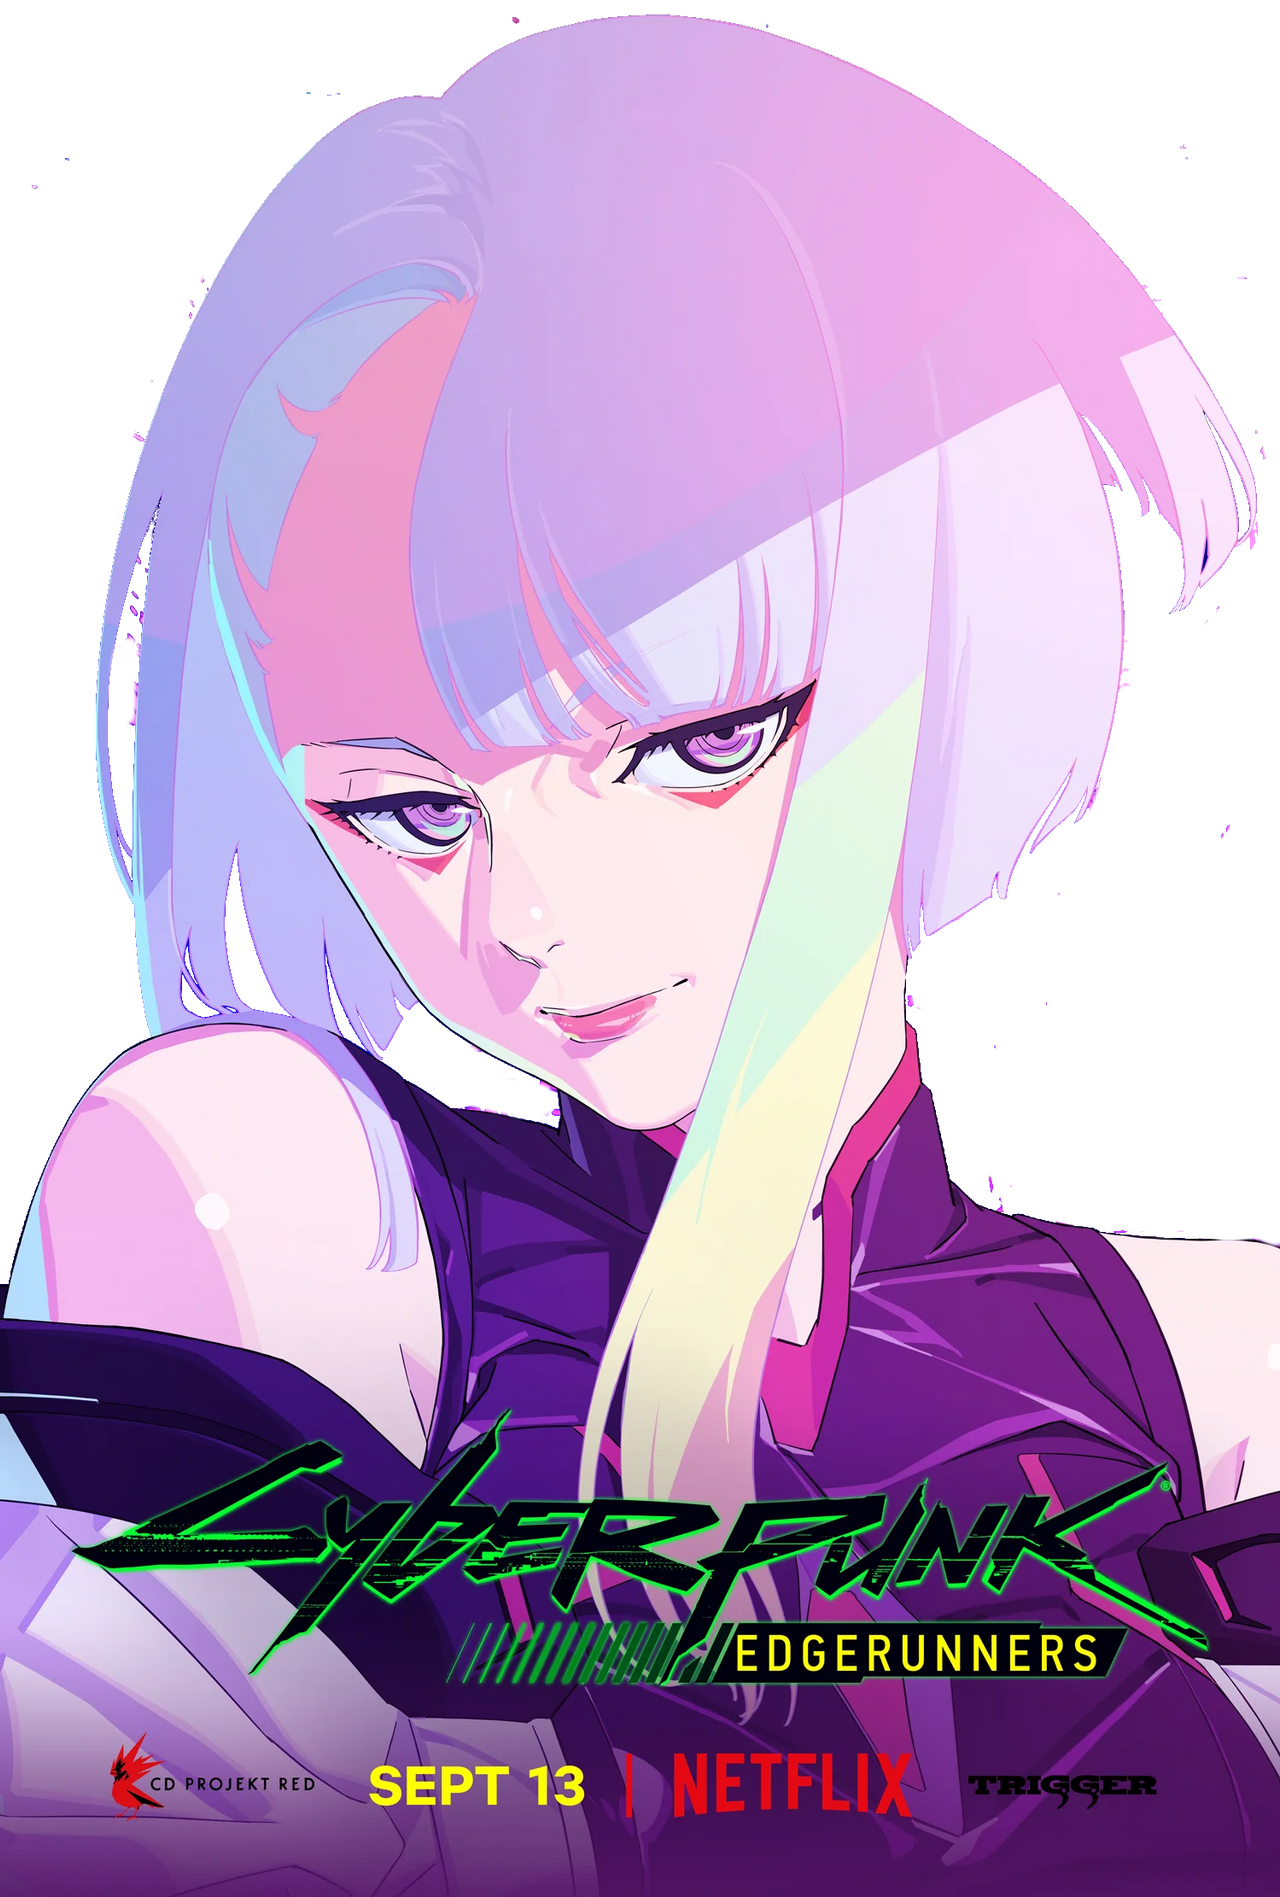 Cyberpunk Lucy by arcipello on DeviantArt